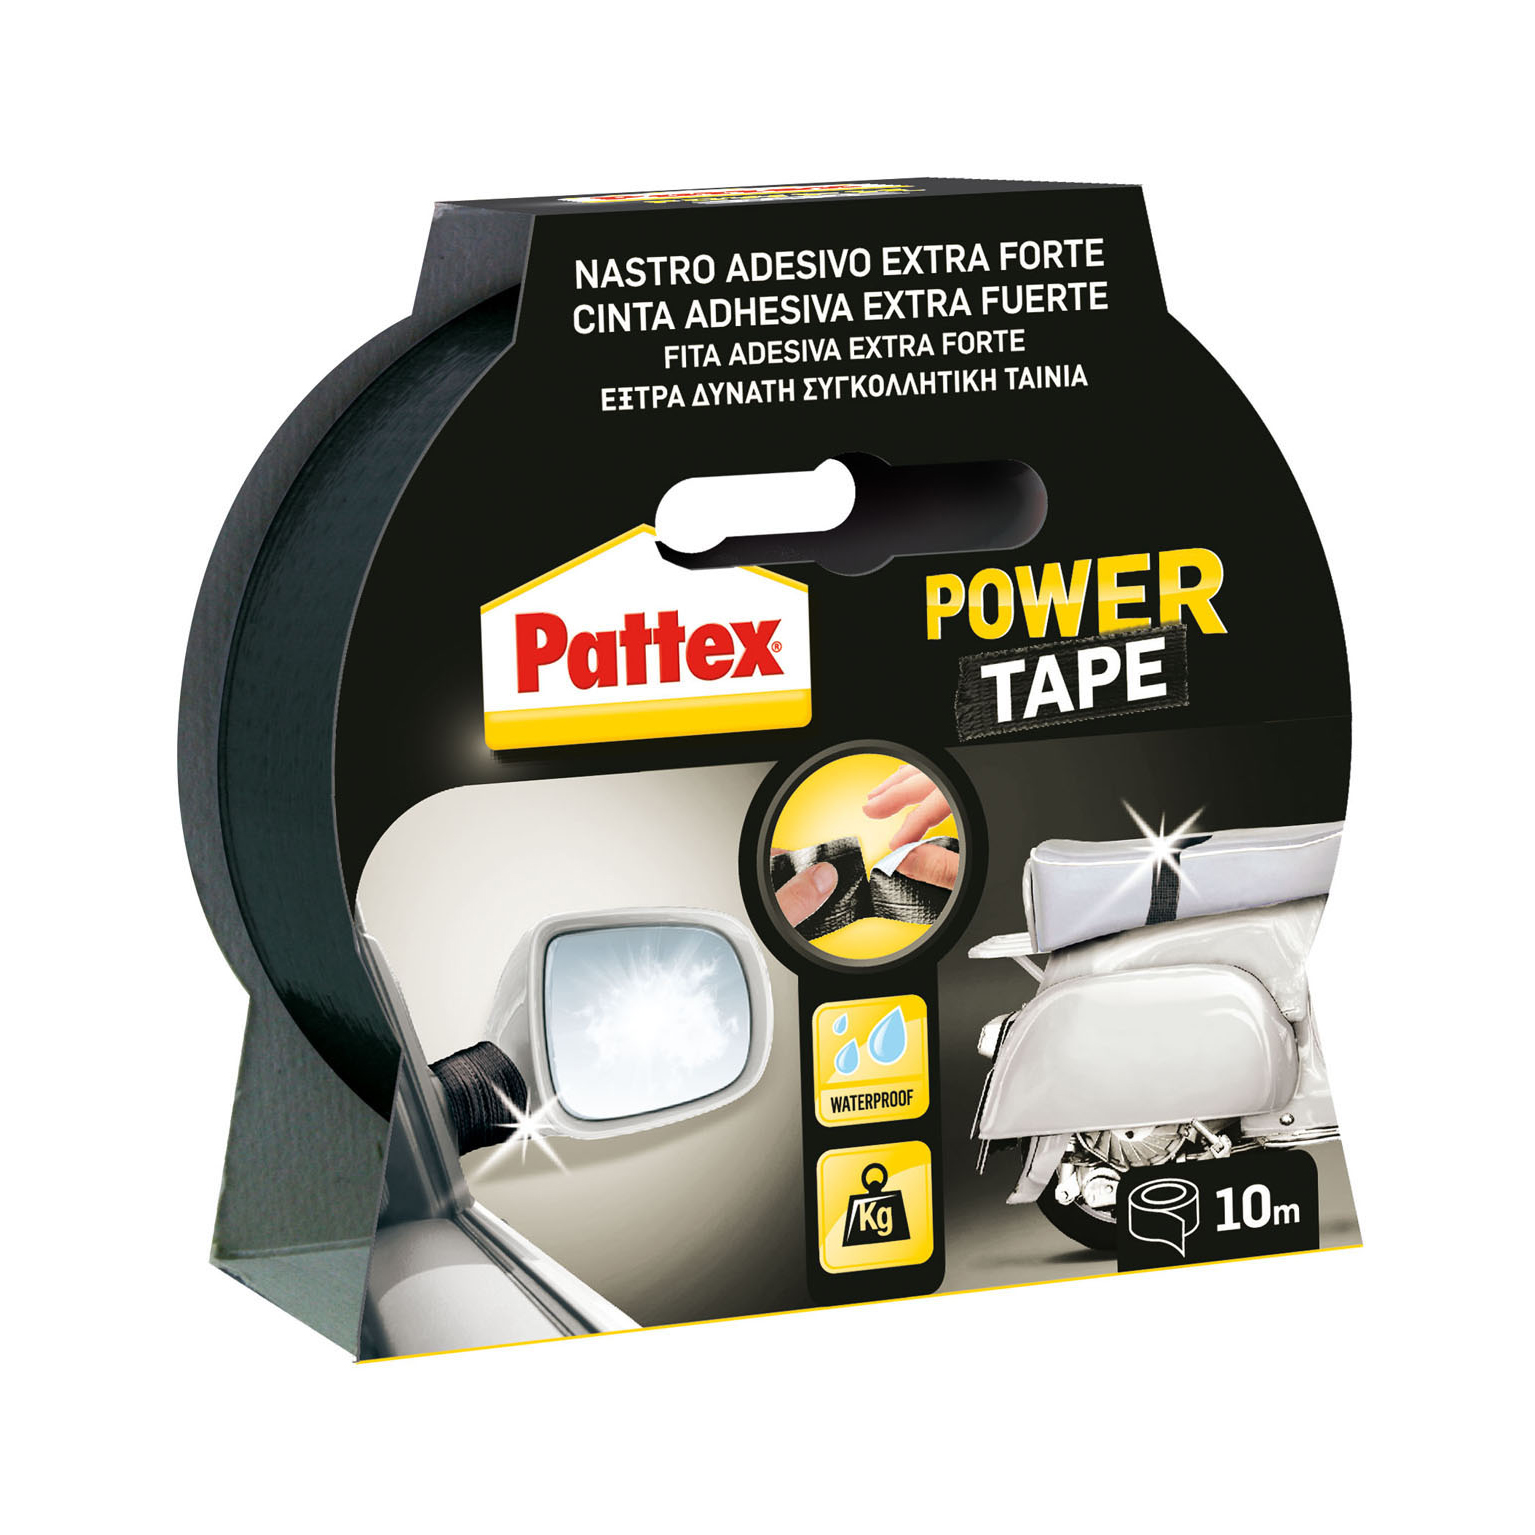 Pattex power tape nero 10m